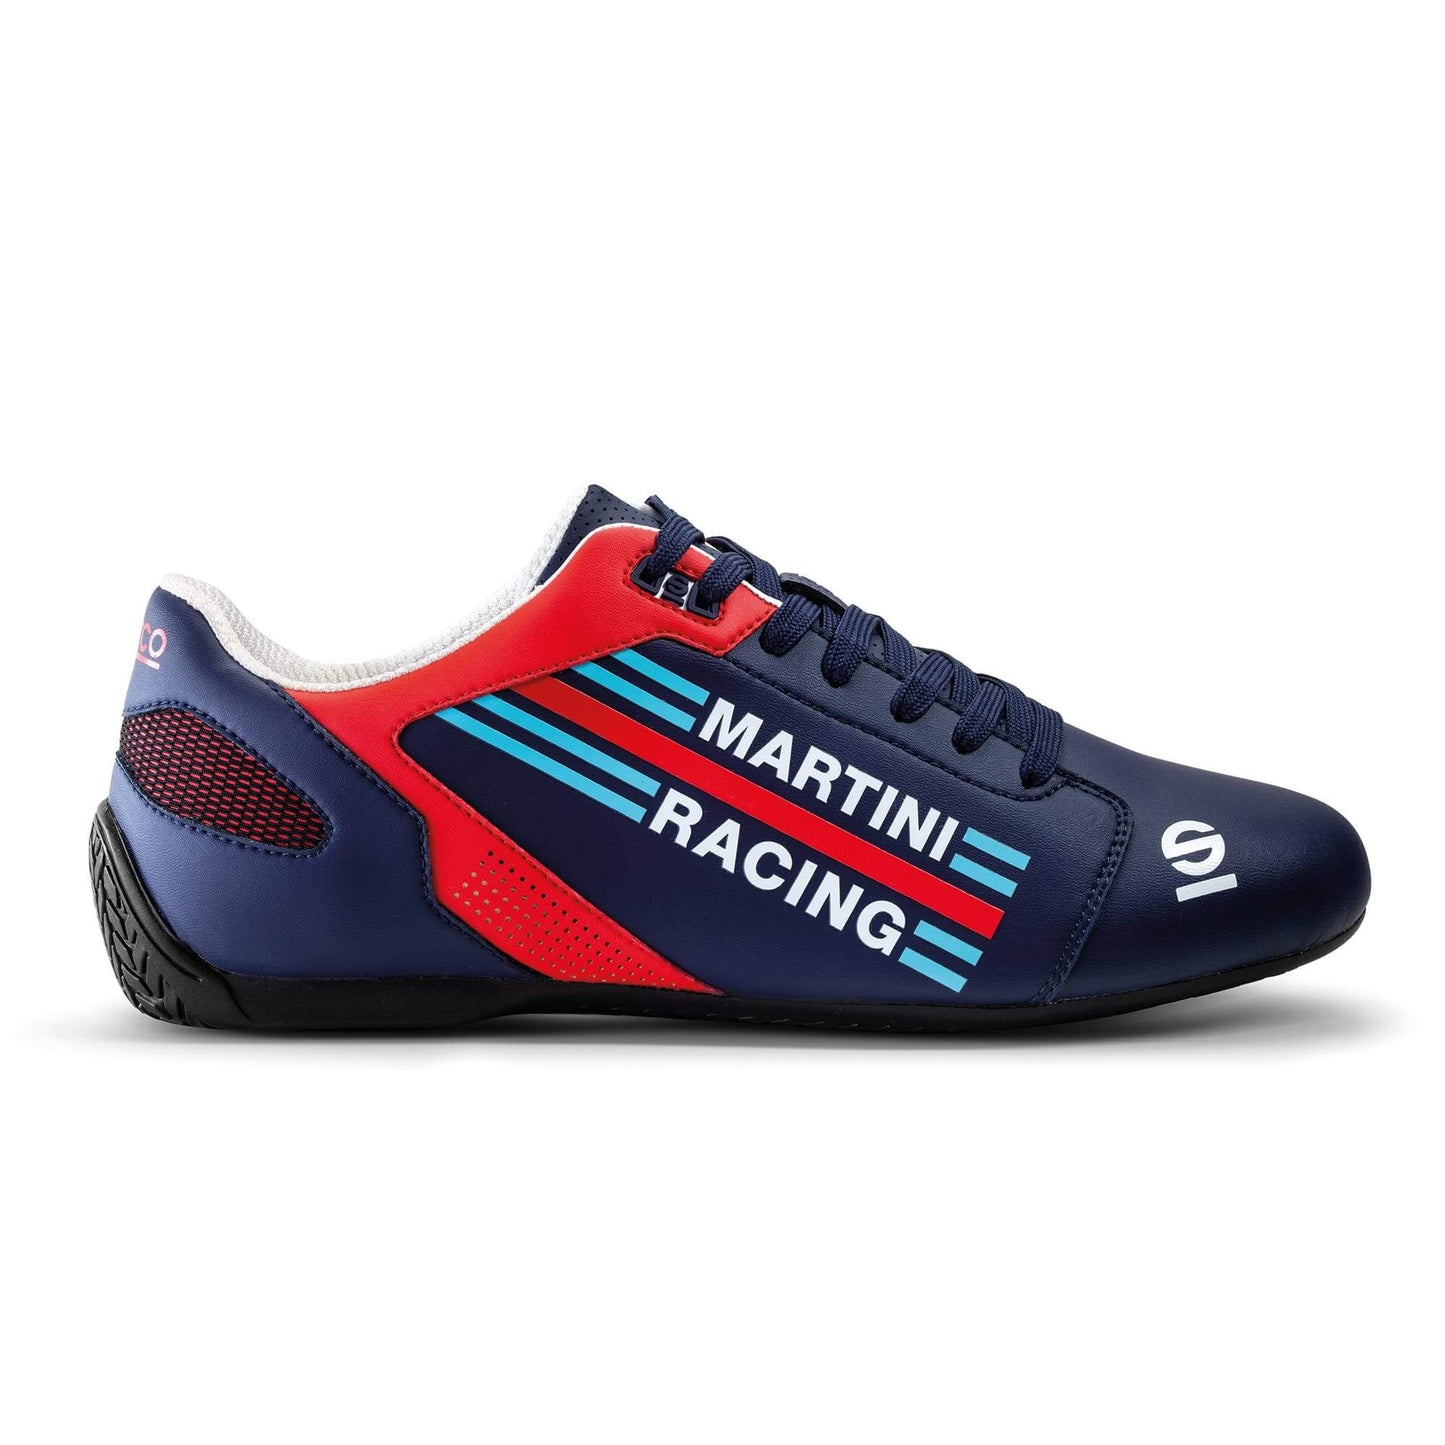 Sneakers SL-17 Martini Racing